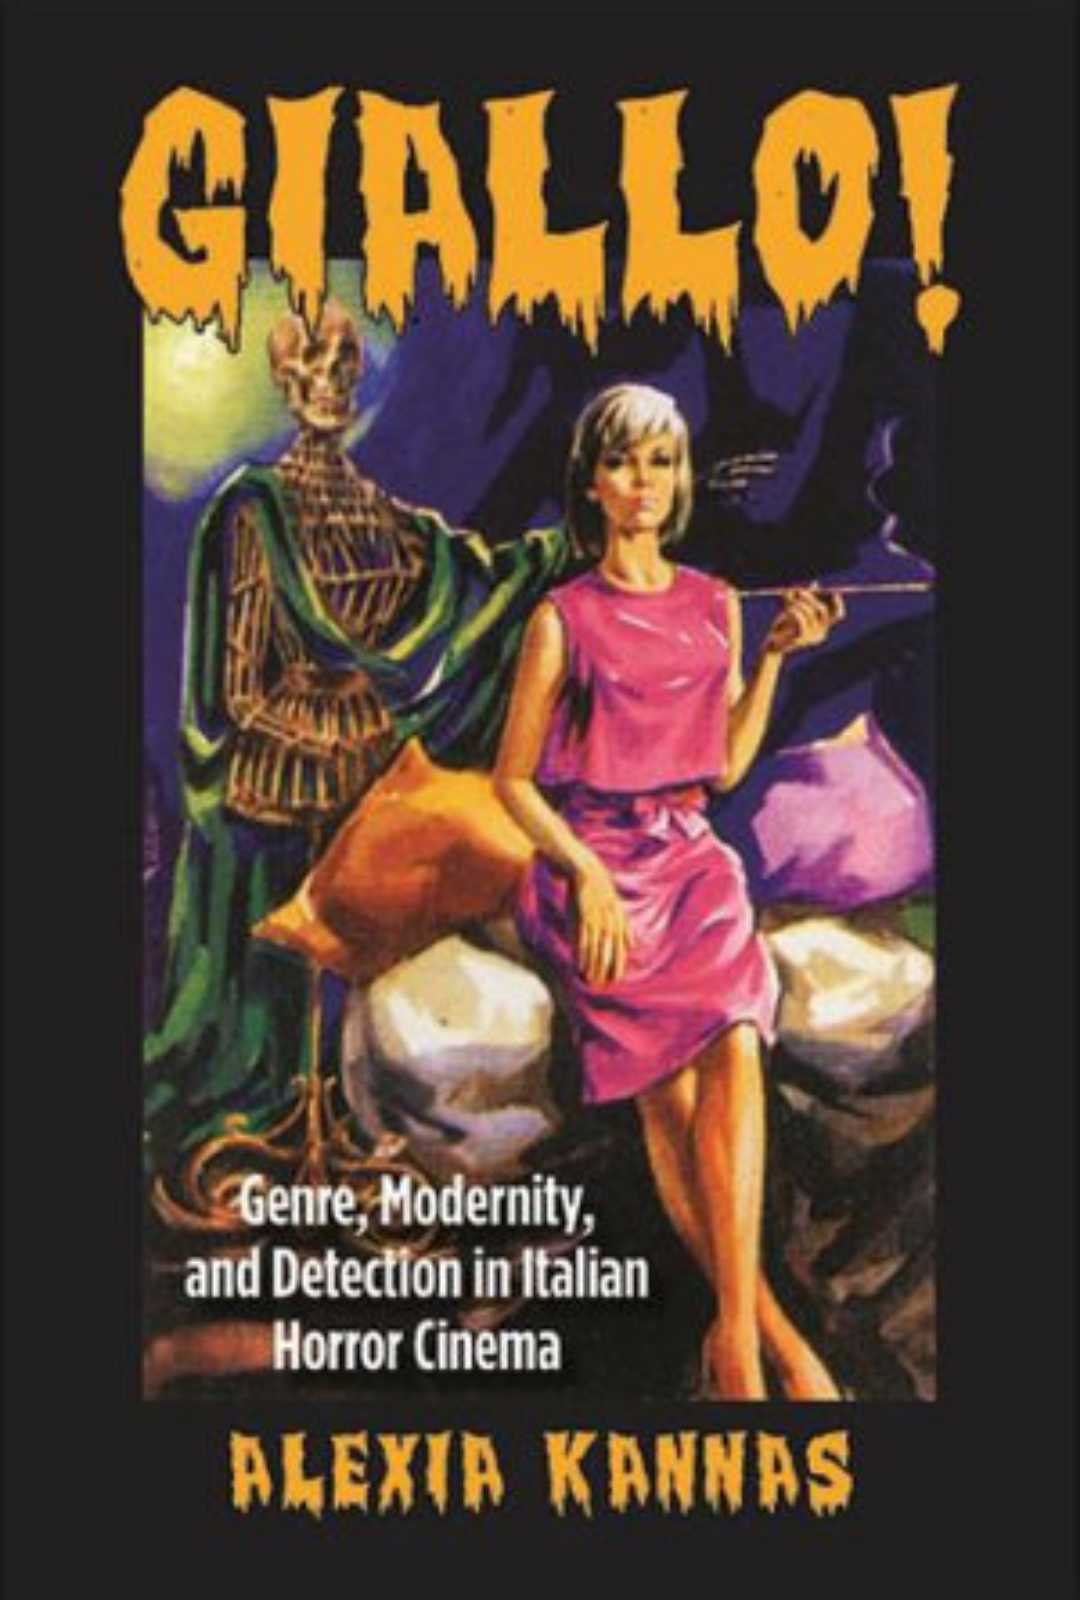 Giallo! Genre, modernity, and detection in italian horror cinema book cover